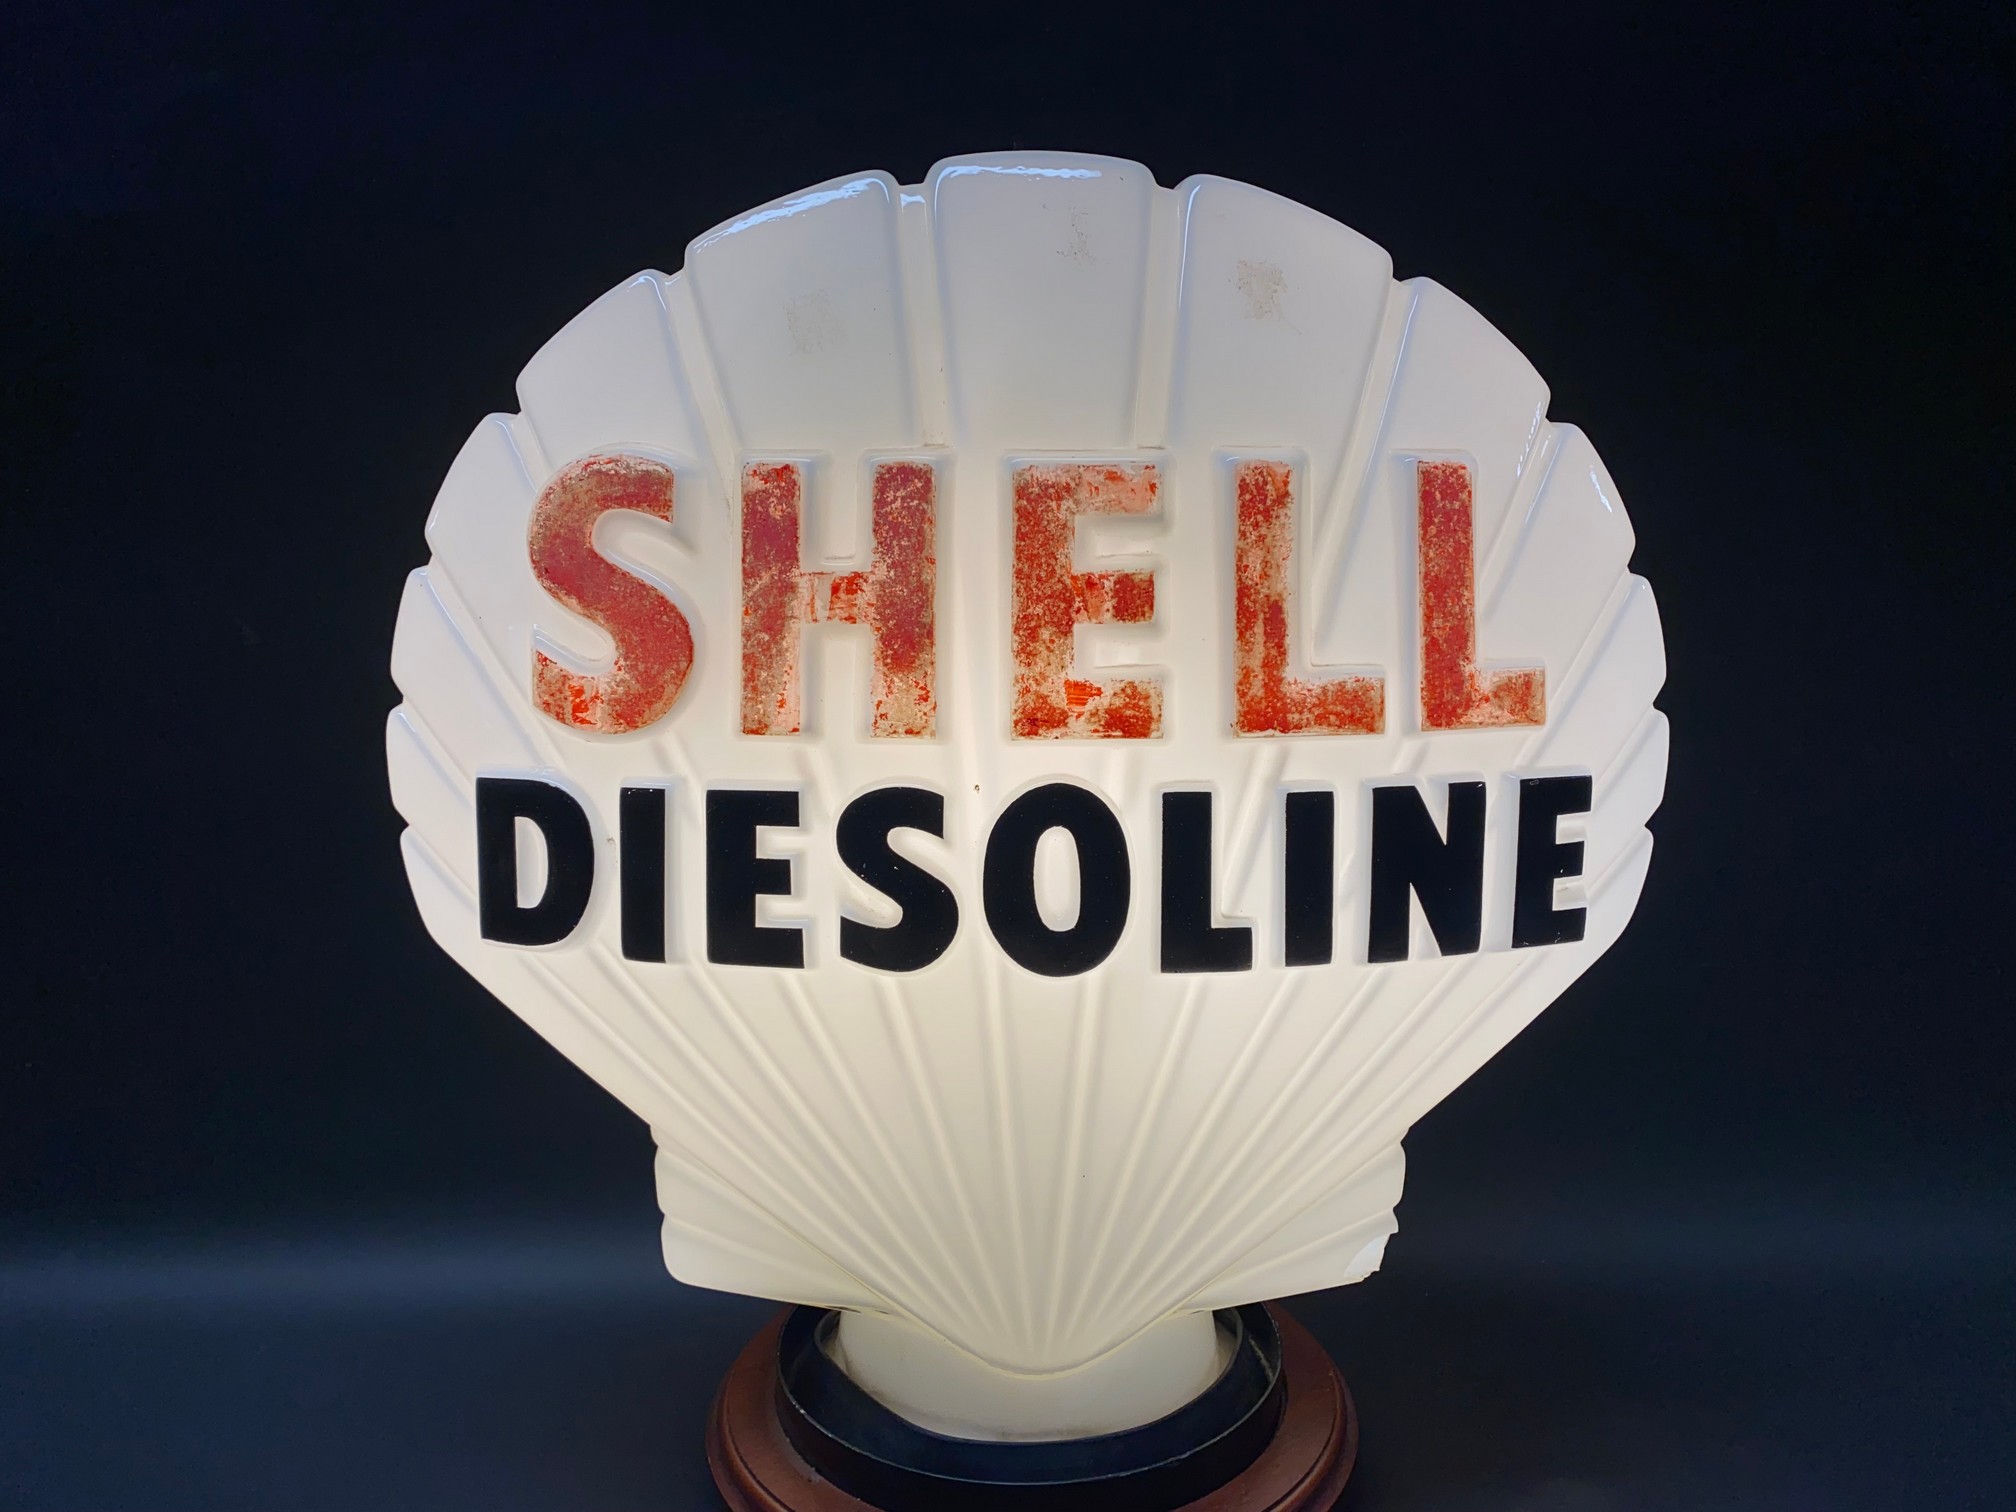 A Shell Diesoline glass petrol pump globe by Hailware, chip to bottom corner. - Image 2 of 5